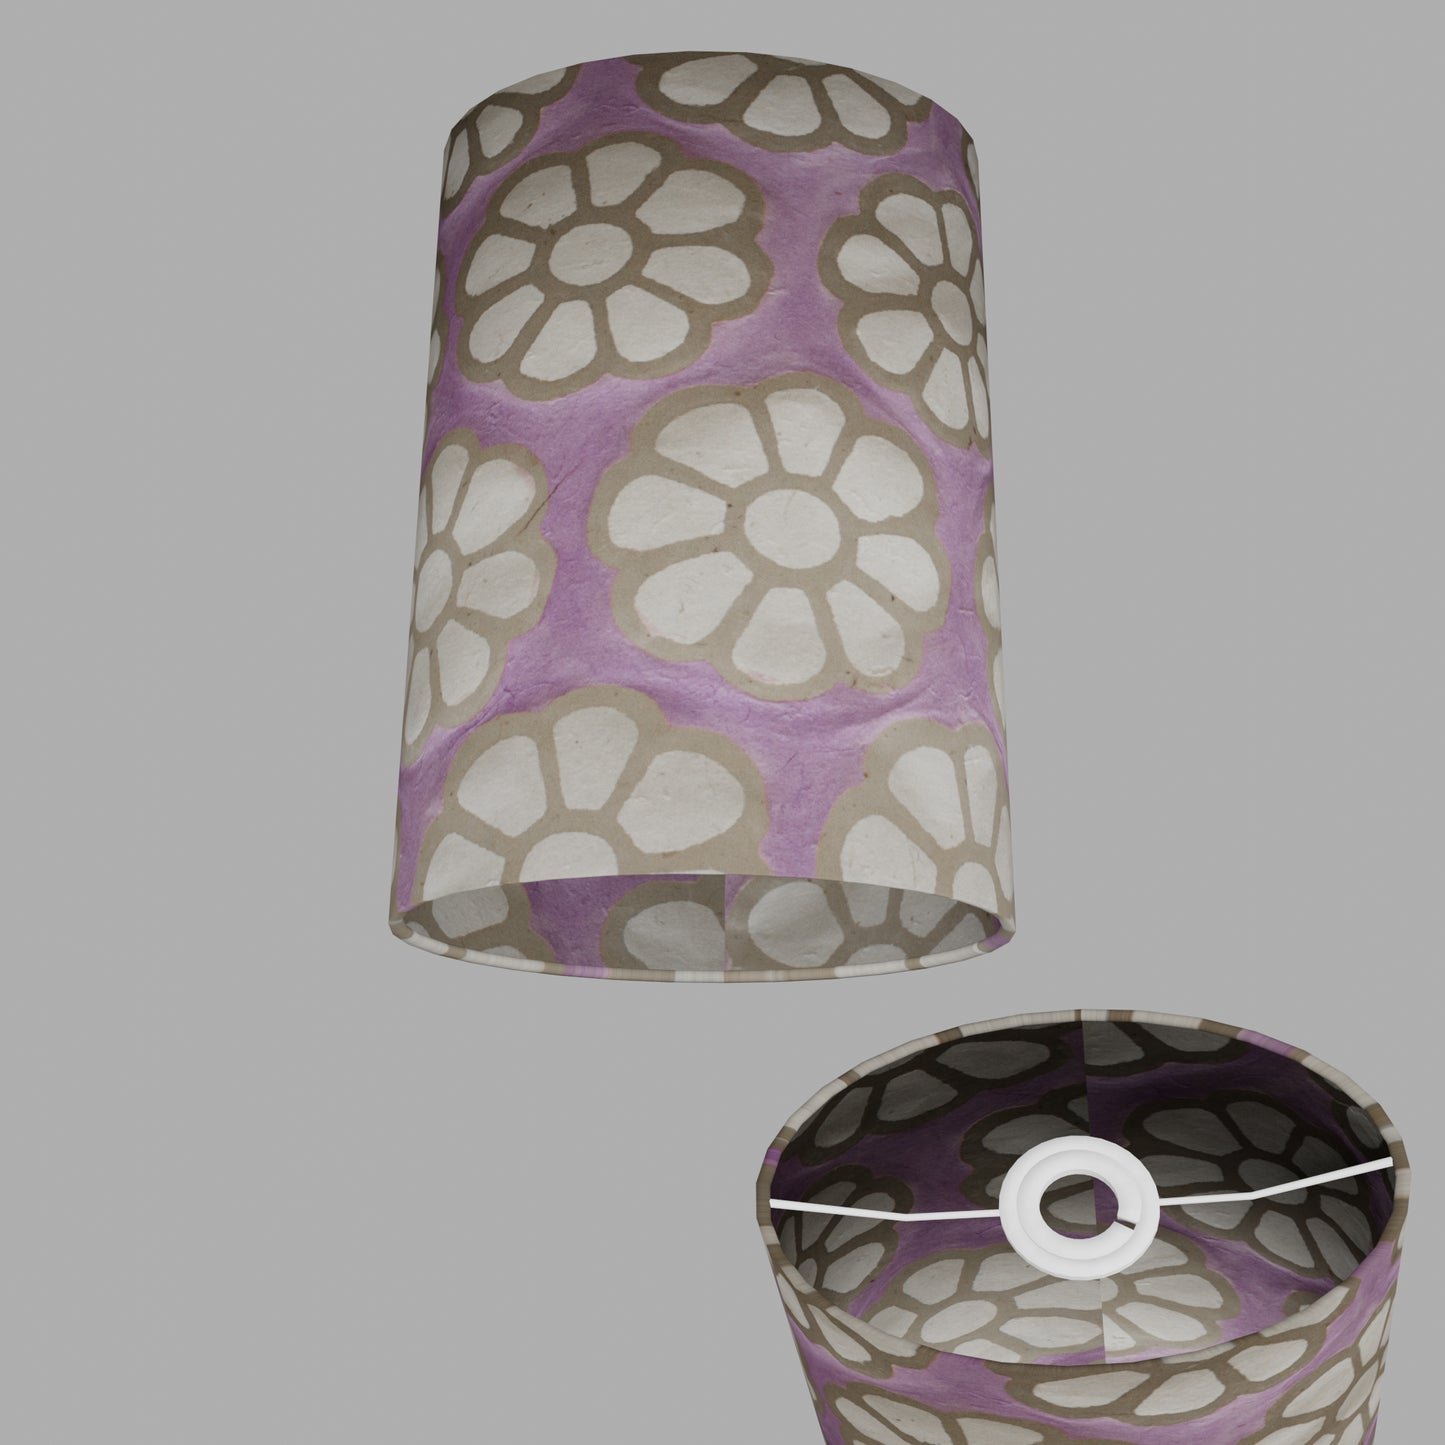 Oval Lamp Shade - P21 - Batik Big Flower on Lilac, 20cm(w) x 30cm(h) x 13cm(d)